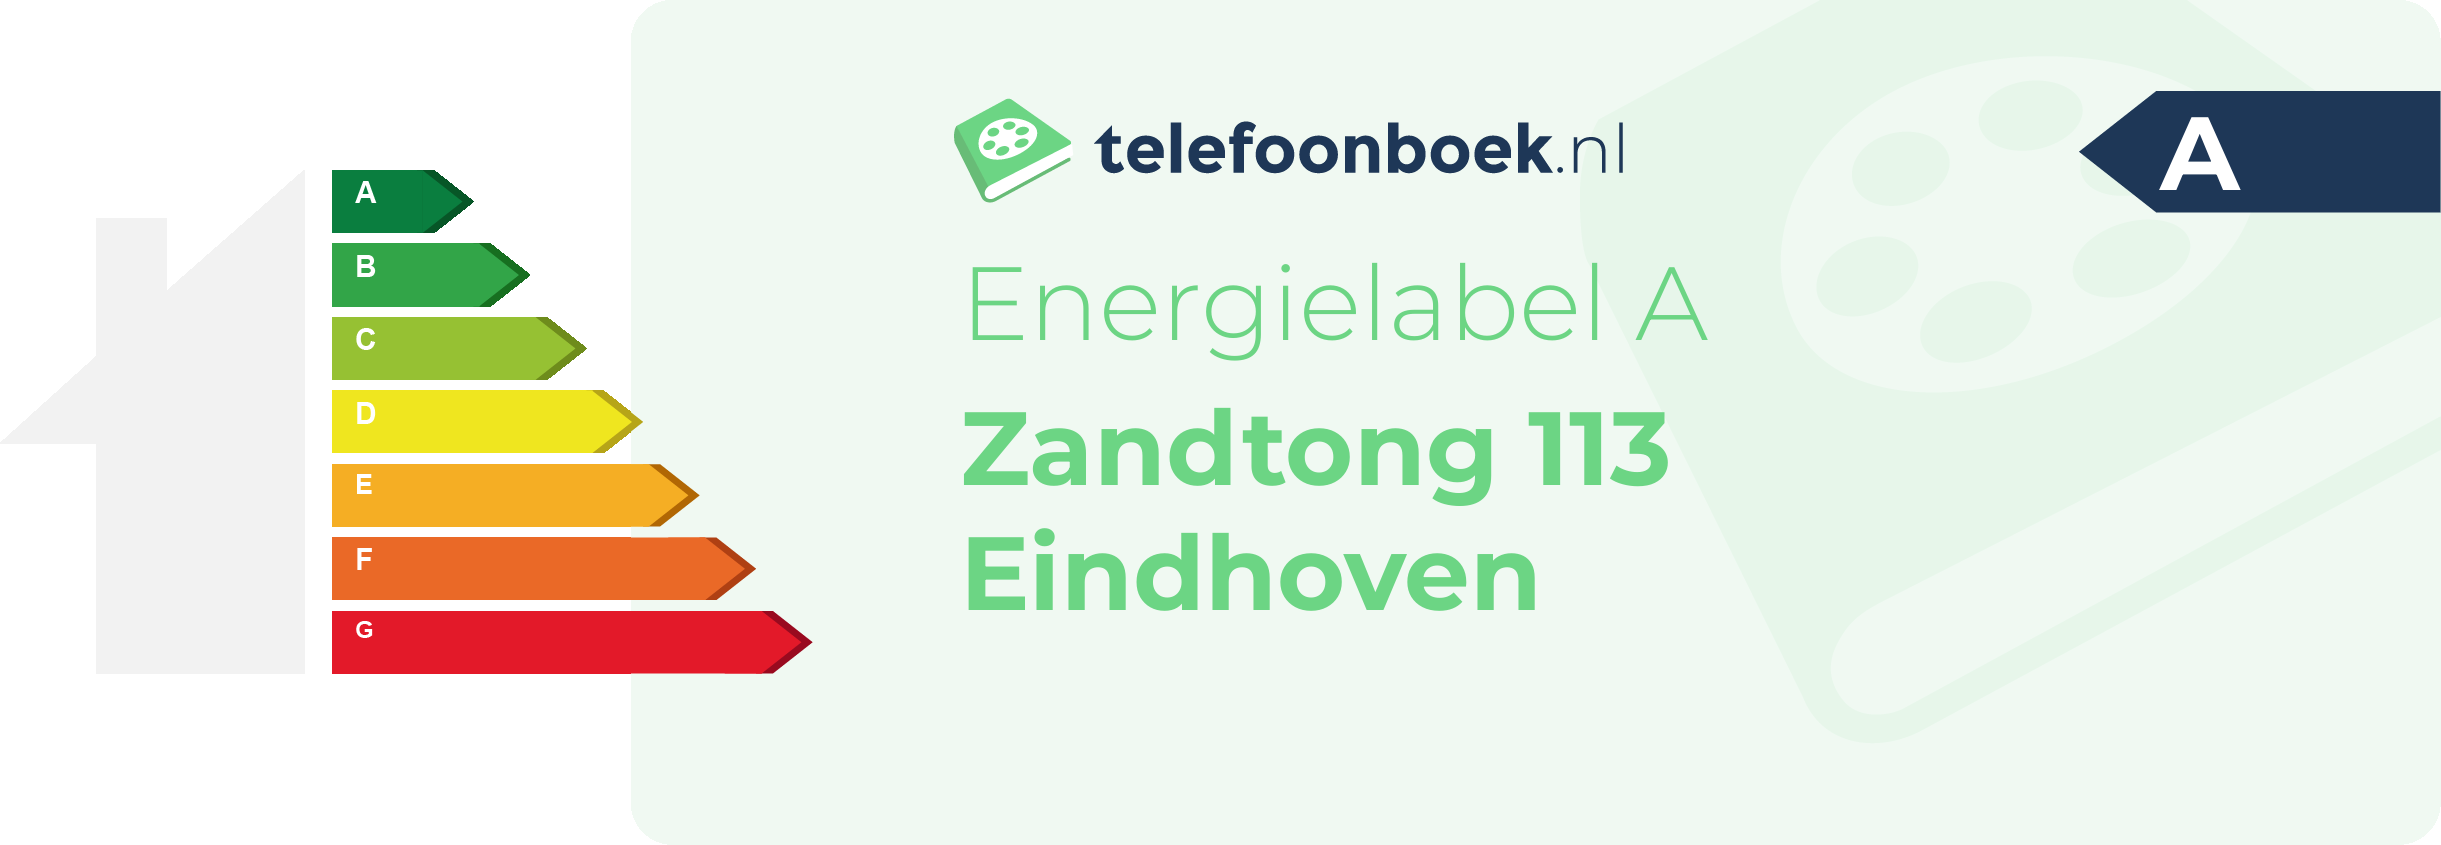 Energielabel Zandtong 113 Eindhoven